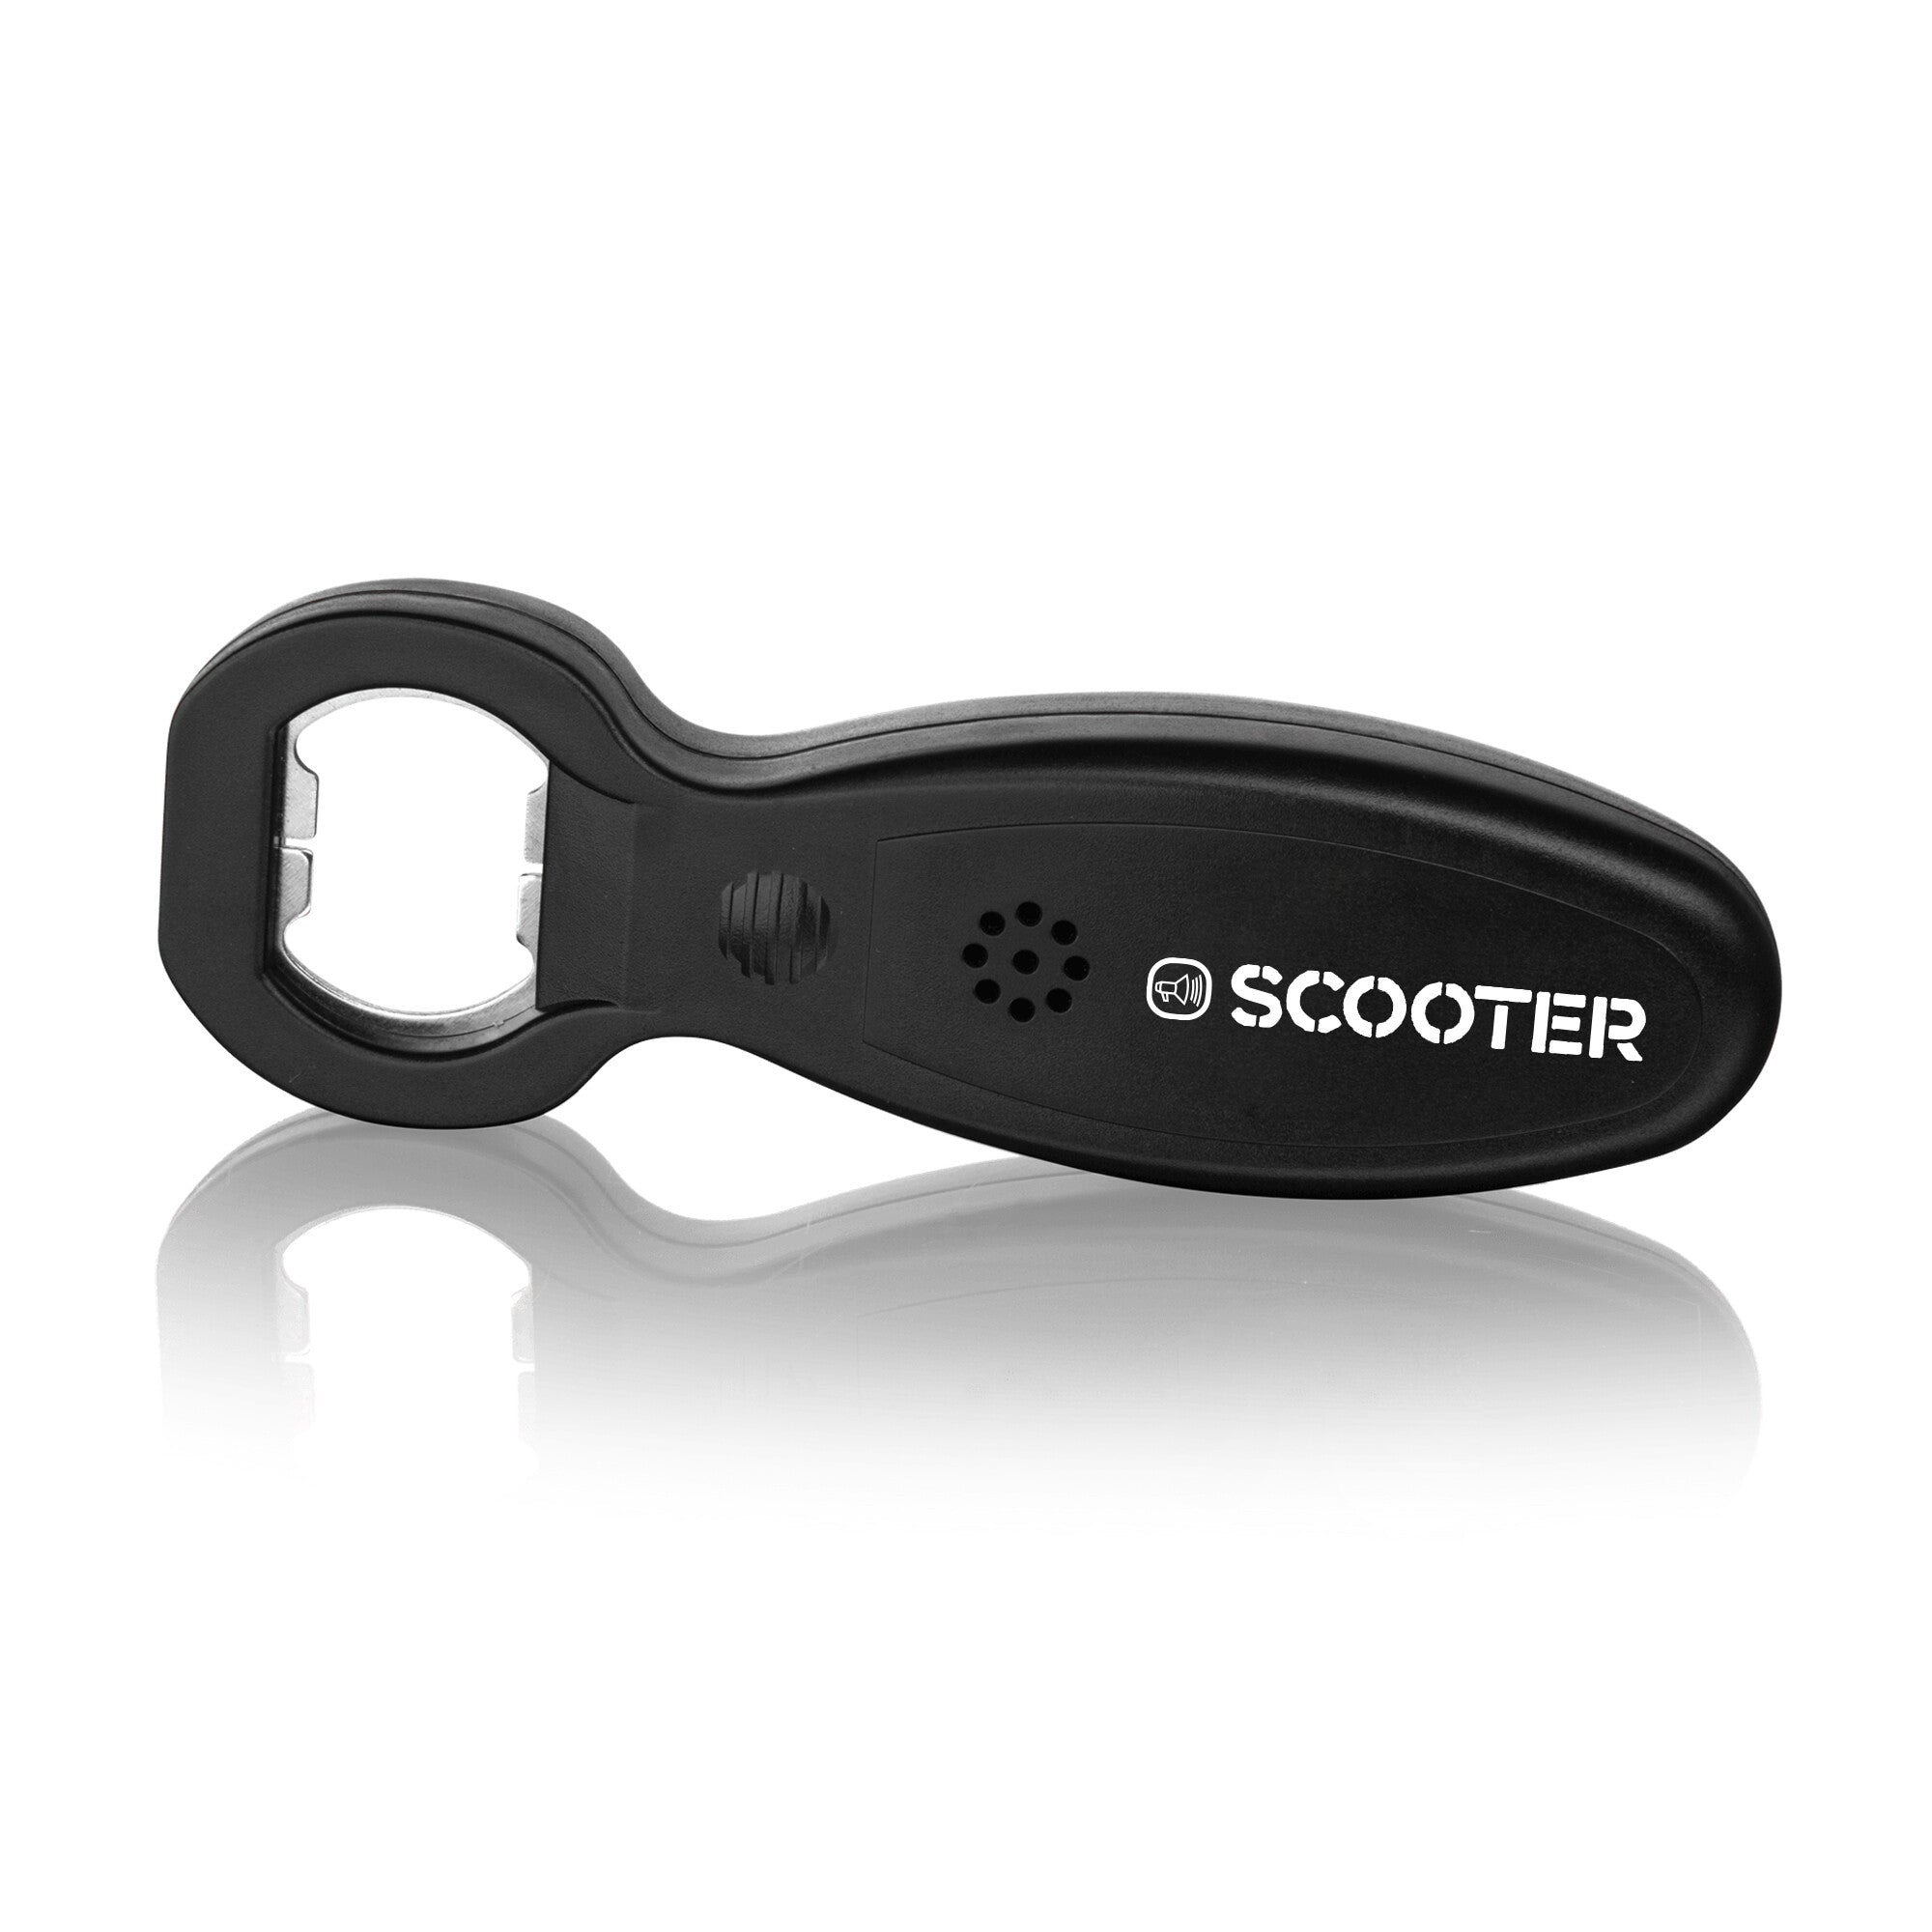 https://images.bravado.de/prod/product-assets/product-asset-data/scooter/scooter/products/134857/web/297851/image-thumb__297851__3000x3000_original/Scooter-Scooter-Flaschenoeffner-schwarz-134857-297851.e4522c24.jpg